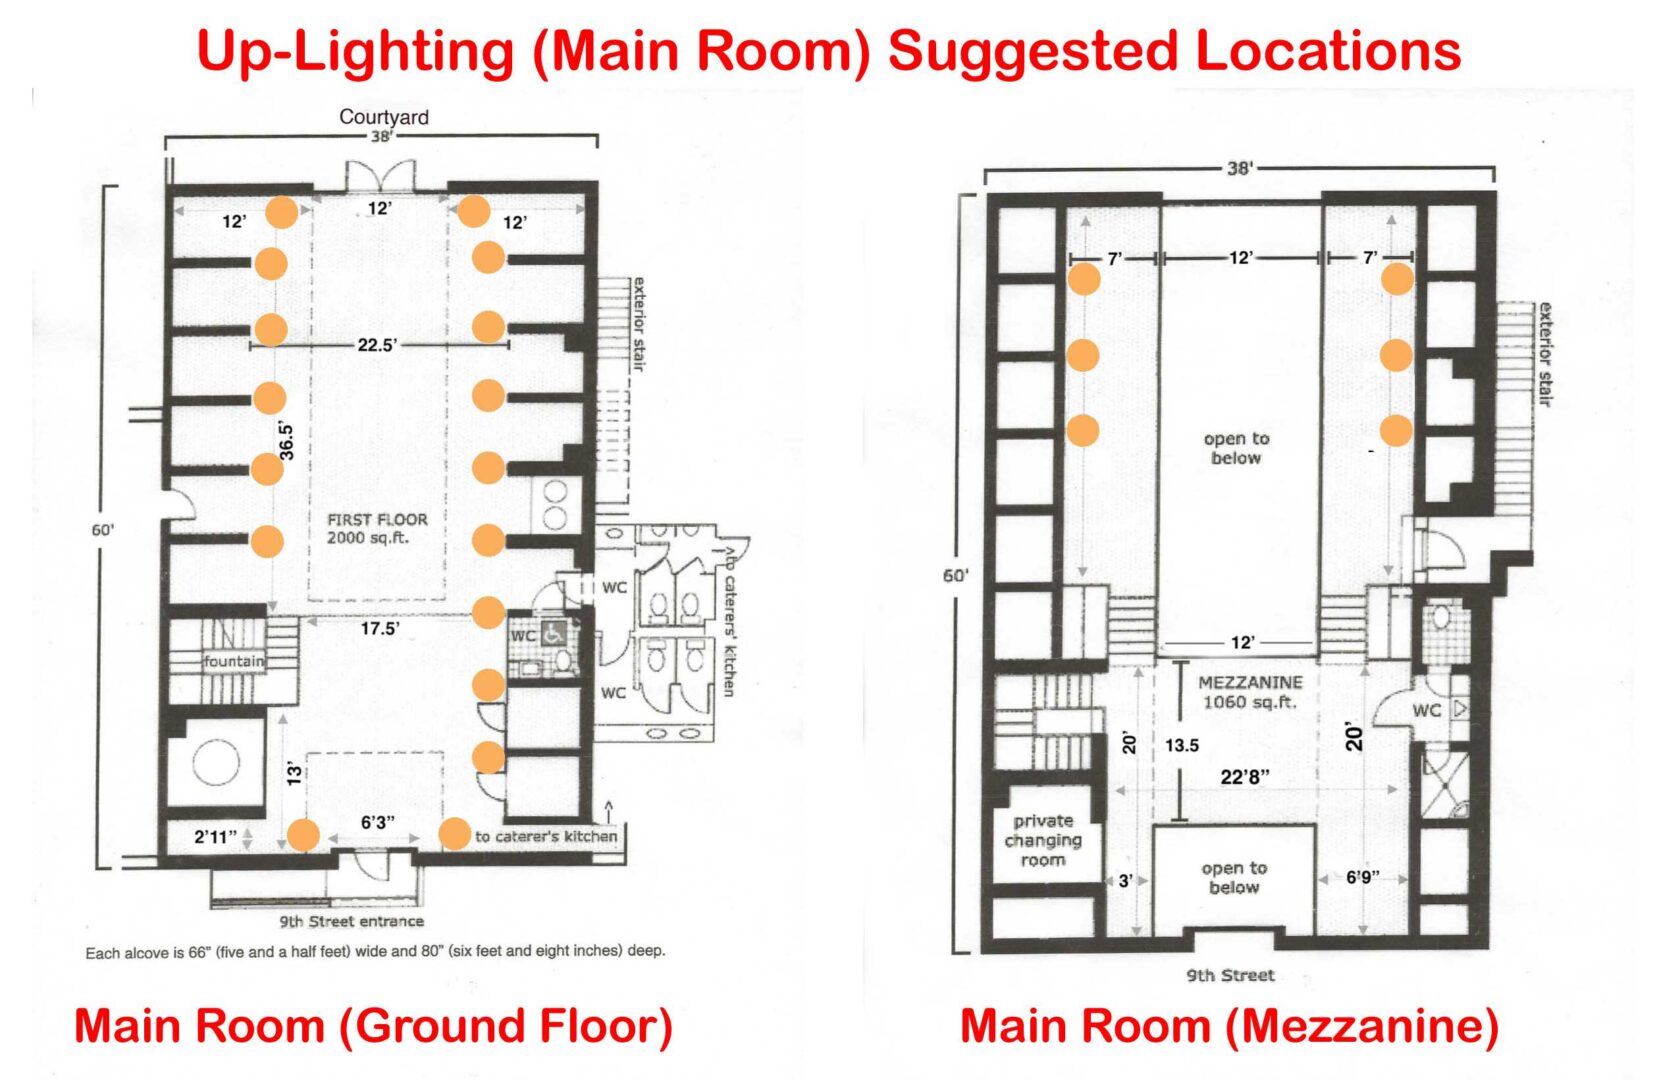 The Foundry LIC - Up-Lighting Floor Plan (Main Room)